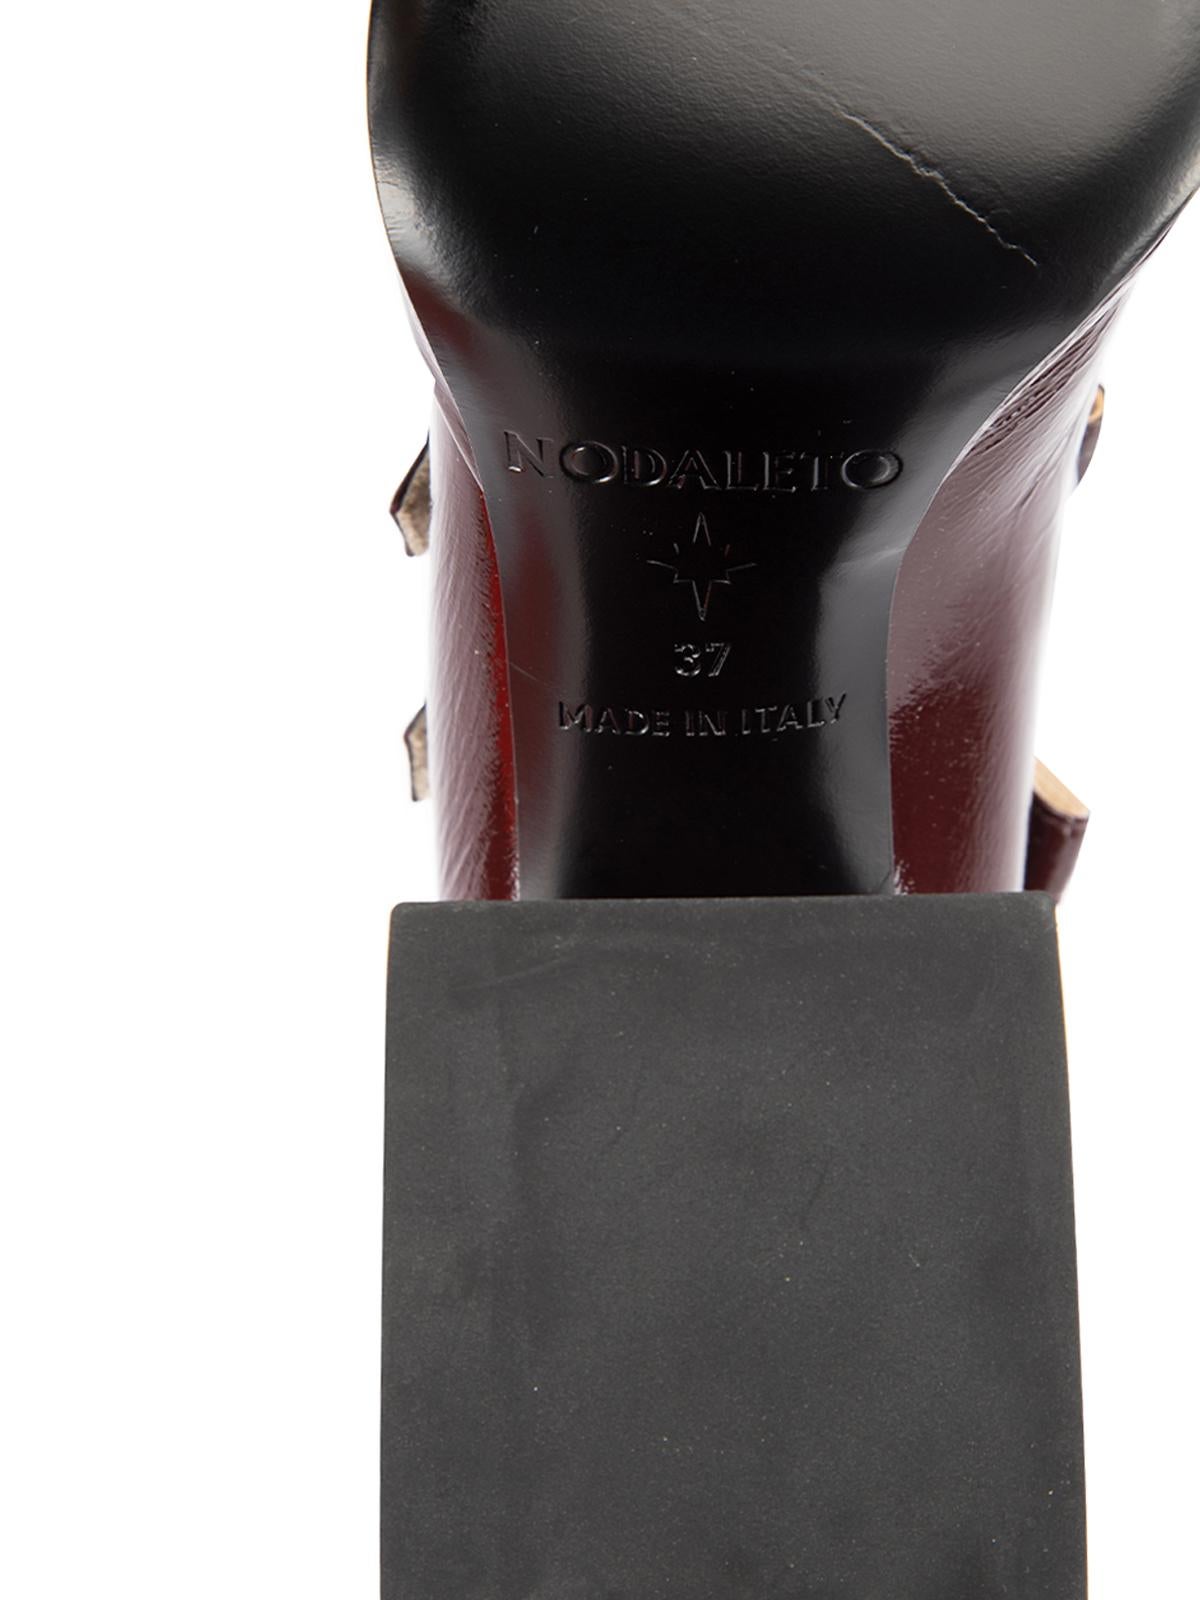 Nodaleto Deep Burgundy Bulla Babies Patent-Leather Mary Jane Heels Size UK 8 2